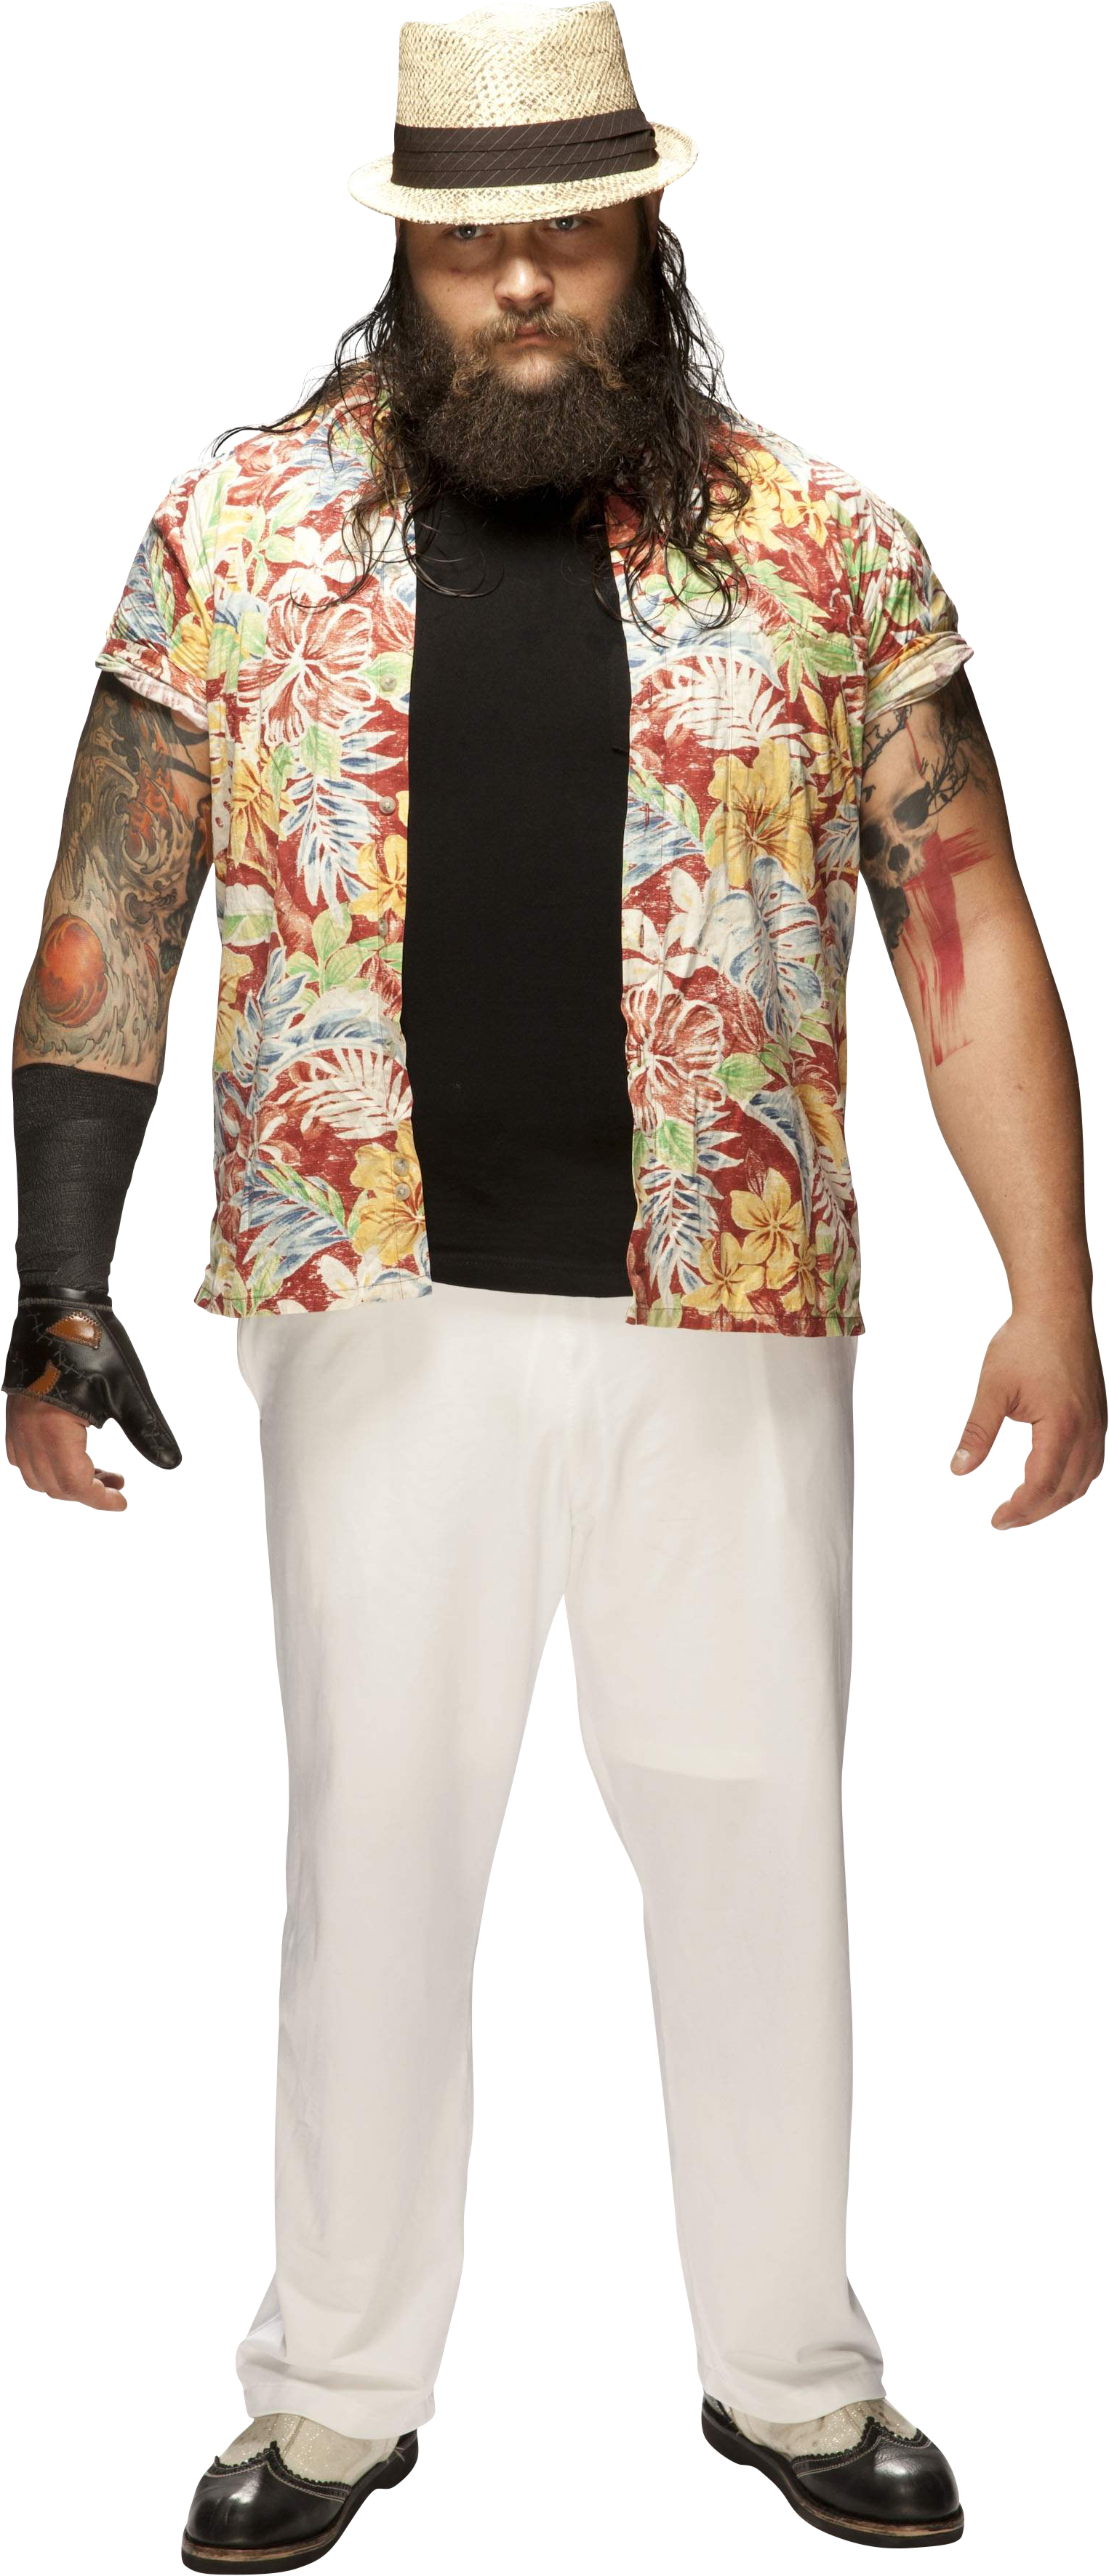 Bray Wyatt Image Transparente